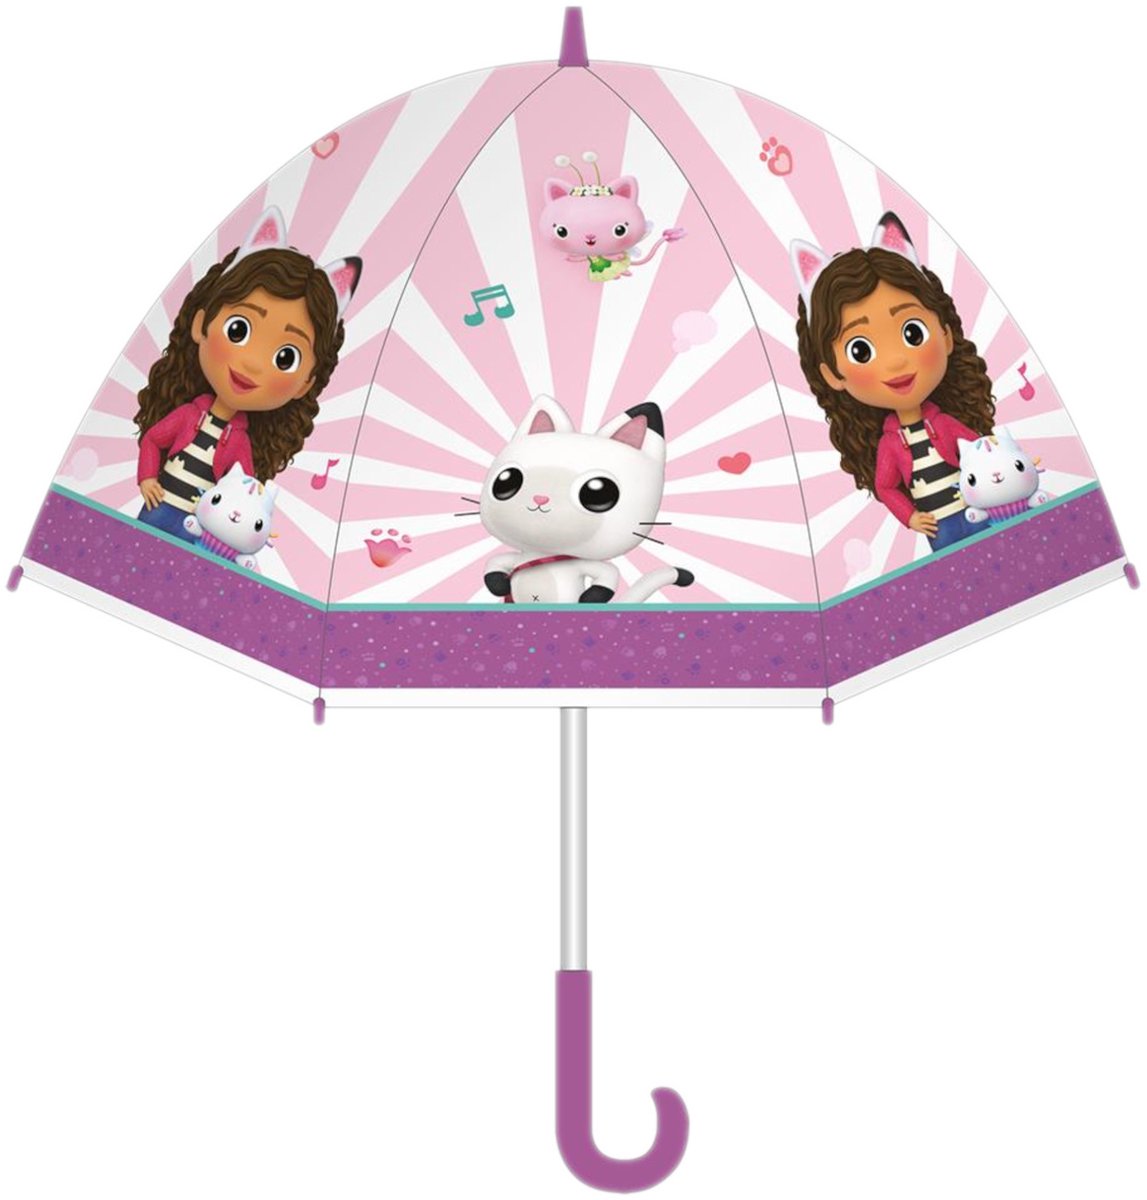 Paraplu - Gabbys dollhouse - 69cm